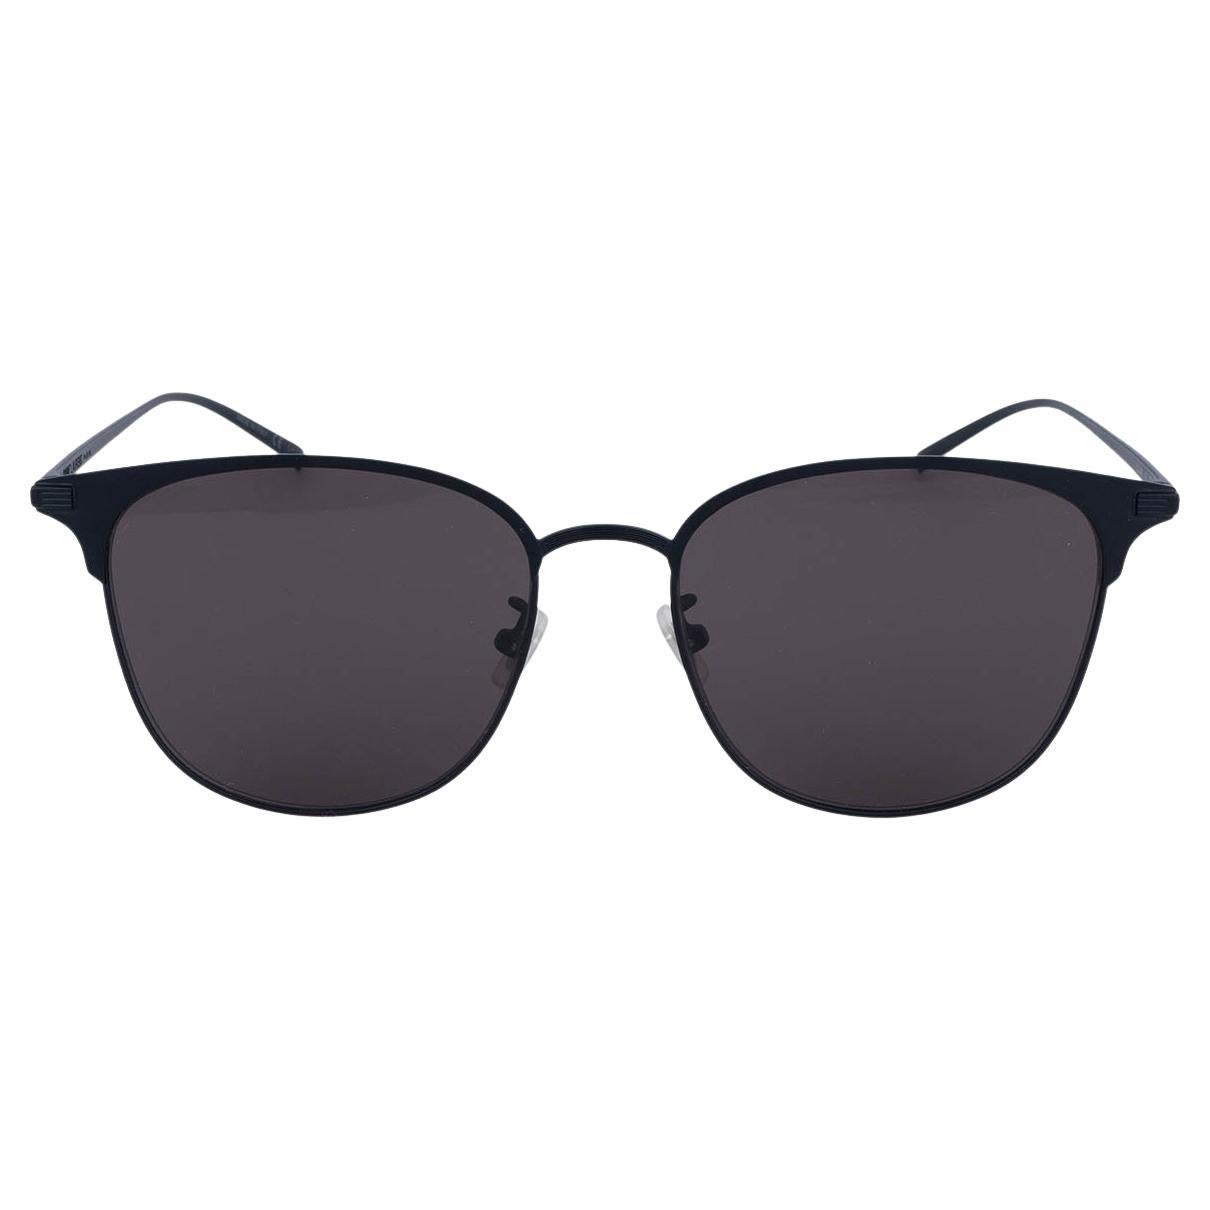 Where are Saint Laurent sunglasses made?